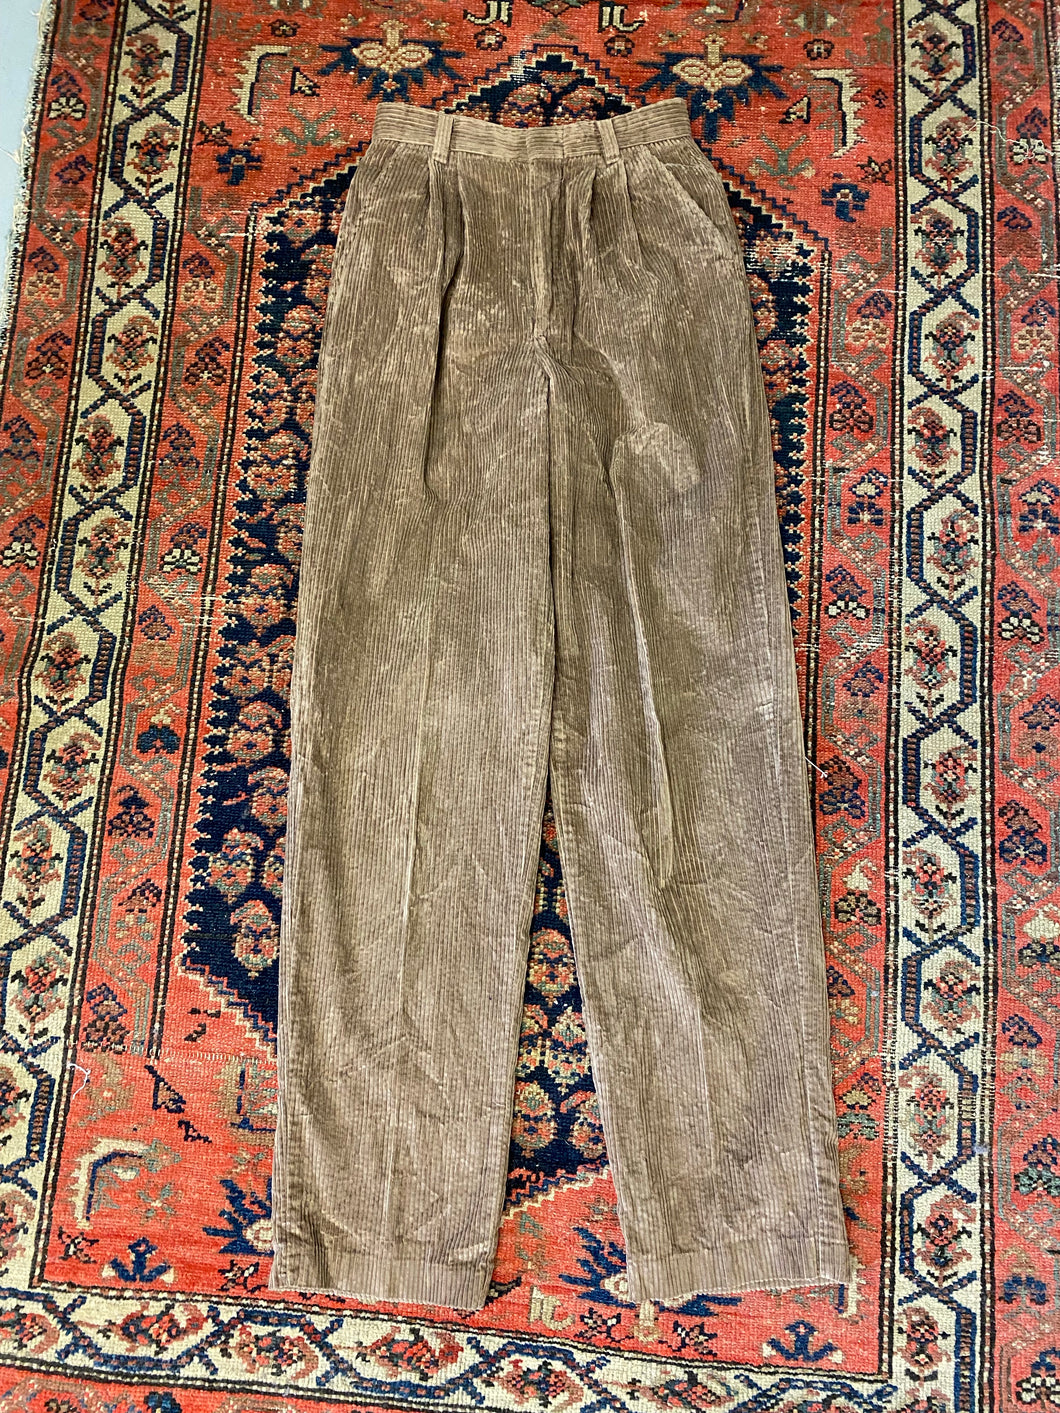 Vintage Brown High Waisted Corduroy Pants - 24in